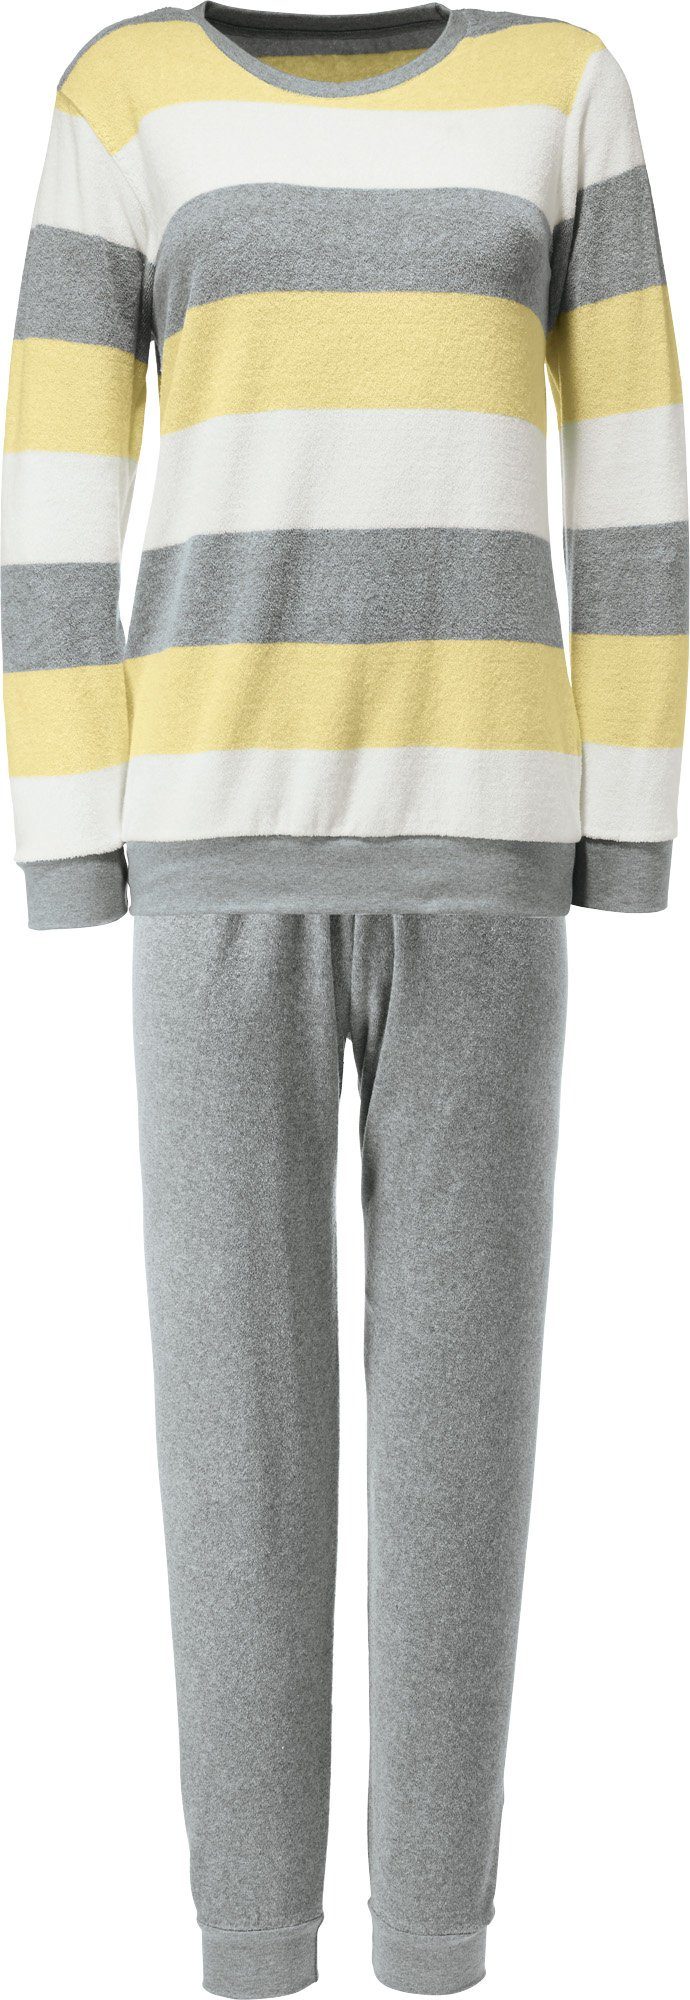 Erwin Müller Pyjama Damen-Schlafanzug Frottee Streifen gelb